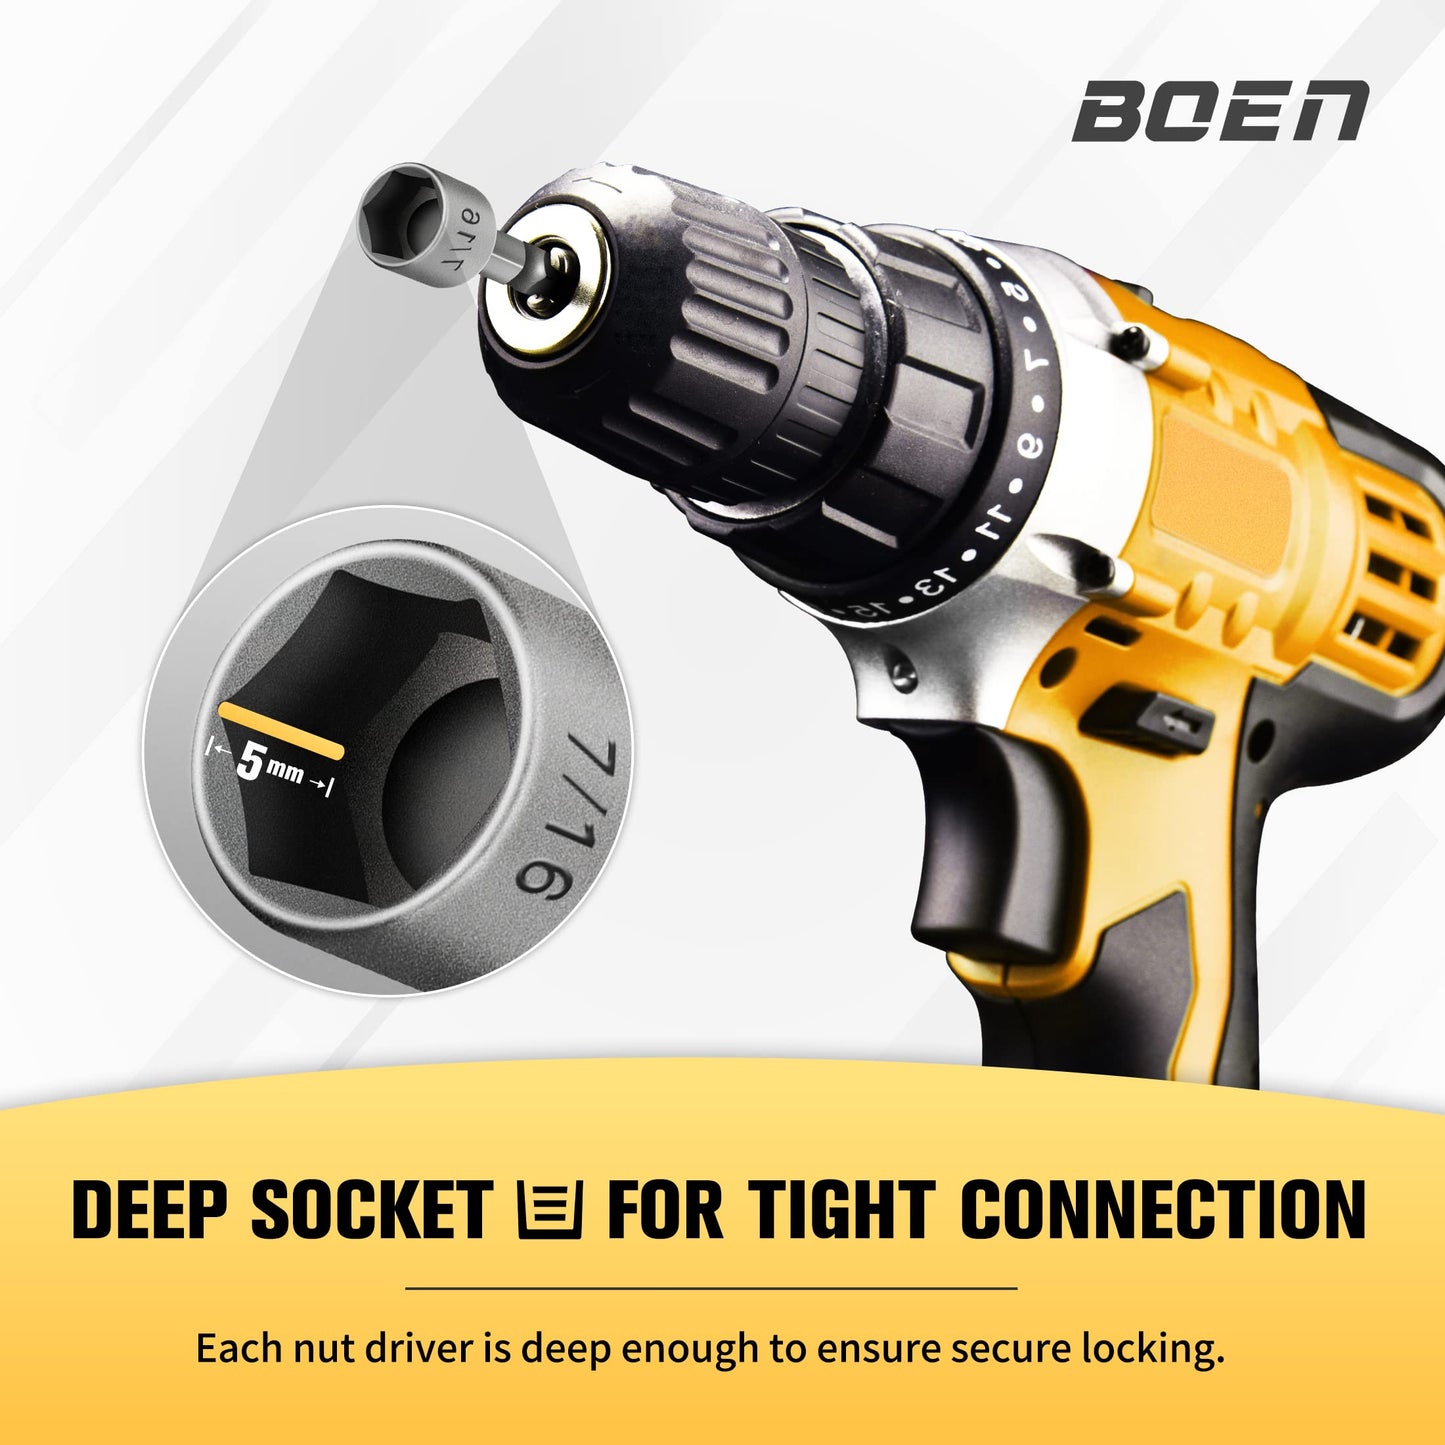 BOEN Tools 1/4Inch Driver Power Nuts Driver Drill Bits Set Metric & SAE - BOEN